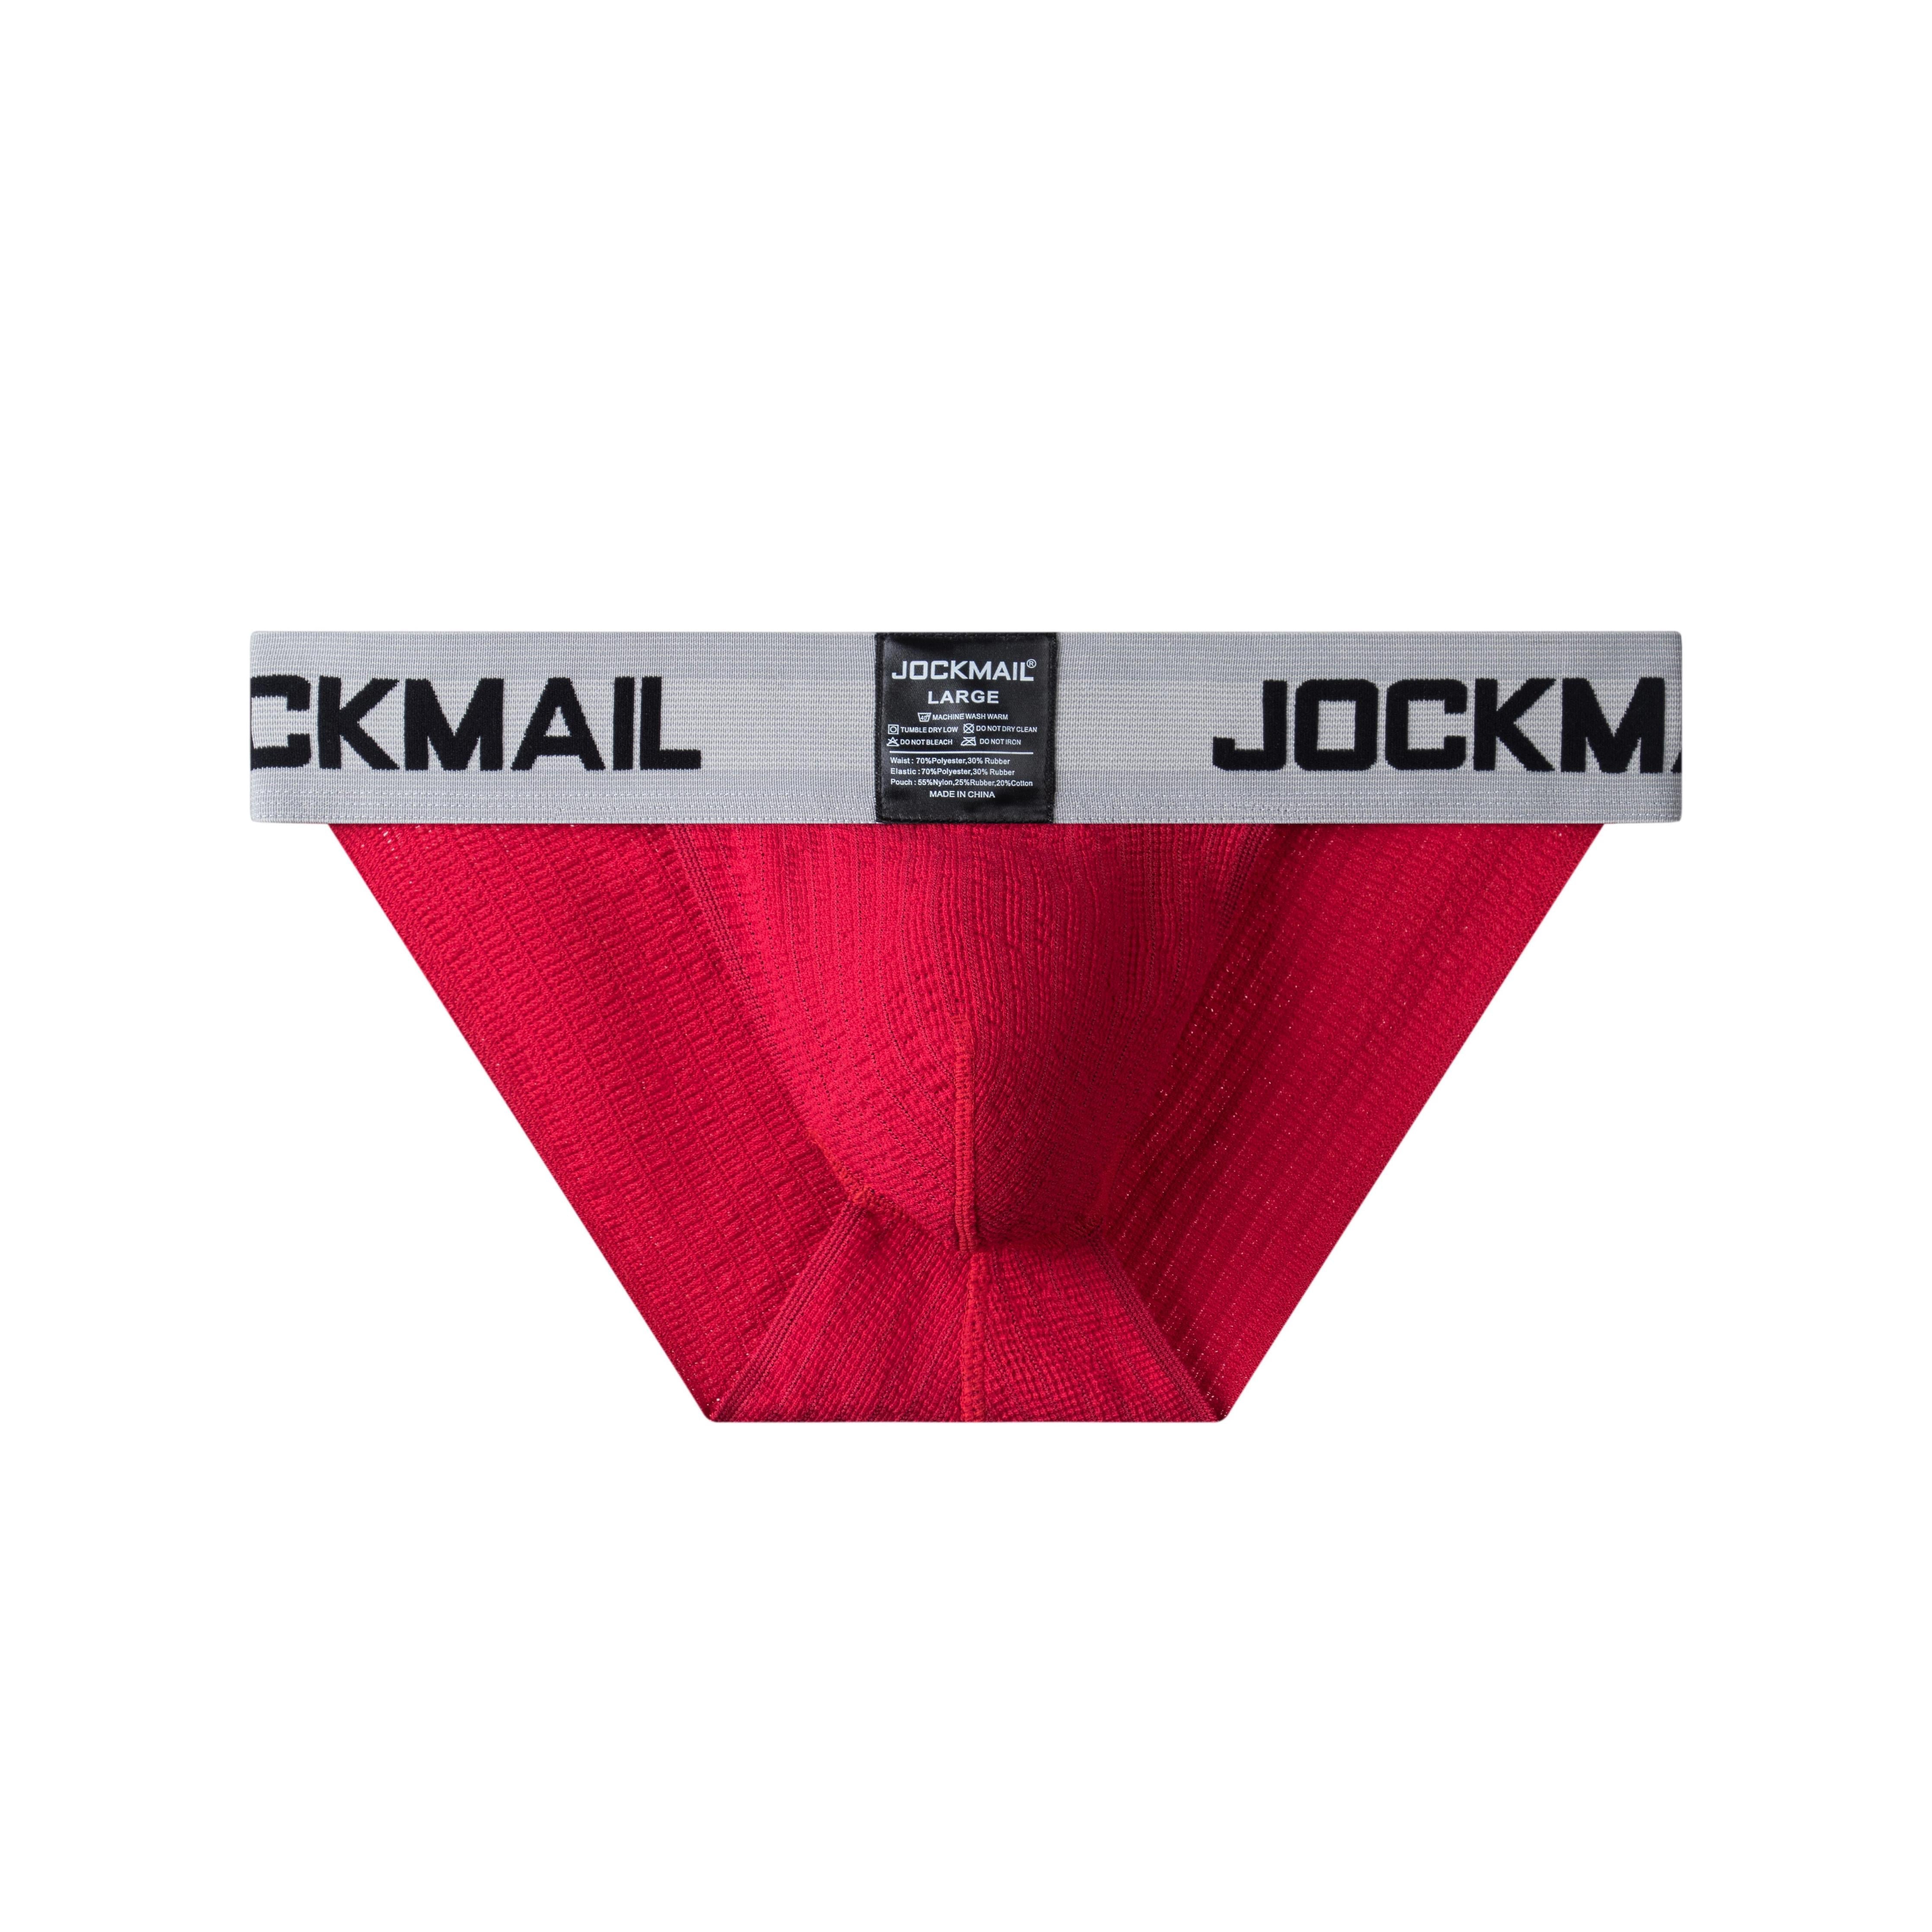 Men's JOCKMAIL JM380 - Old School Pride Brief